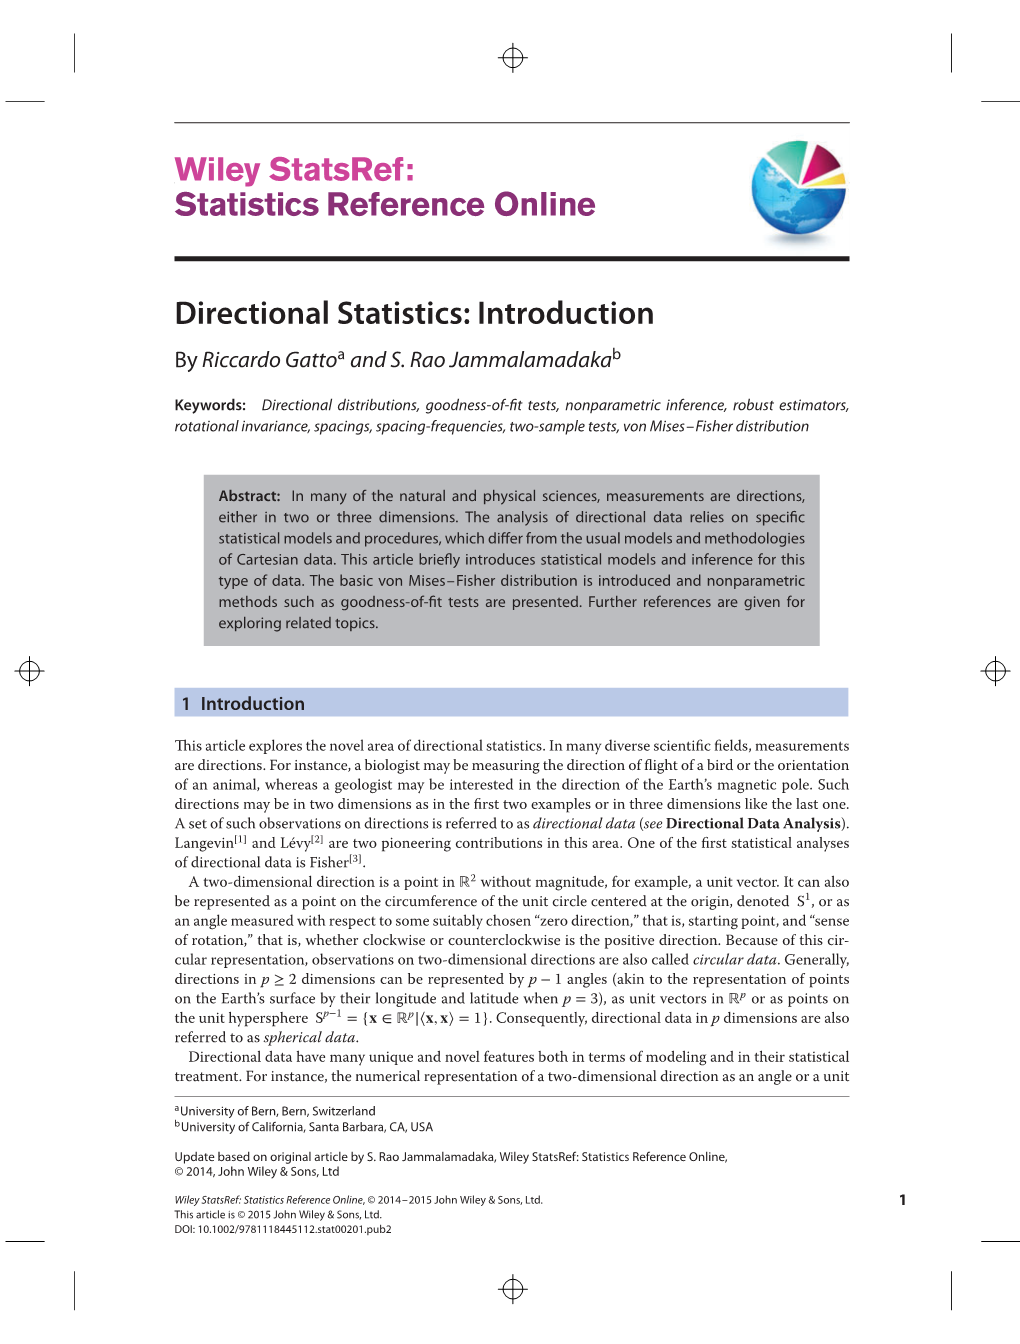 Directional Statistics: Introduction